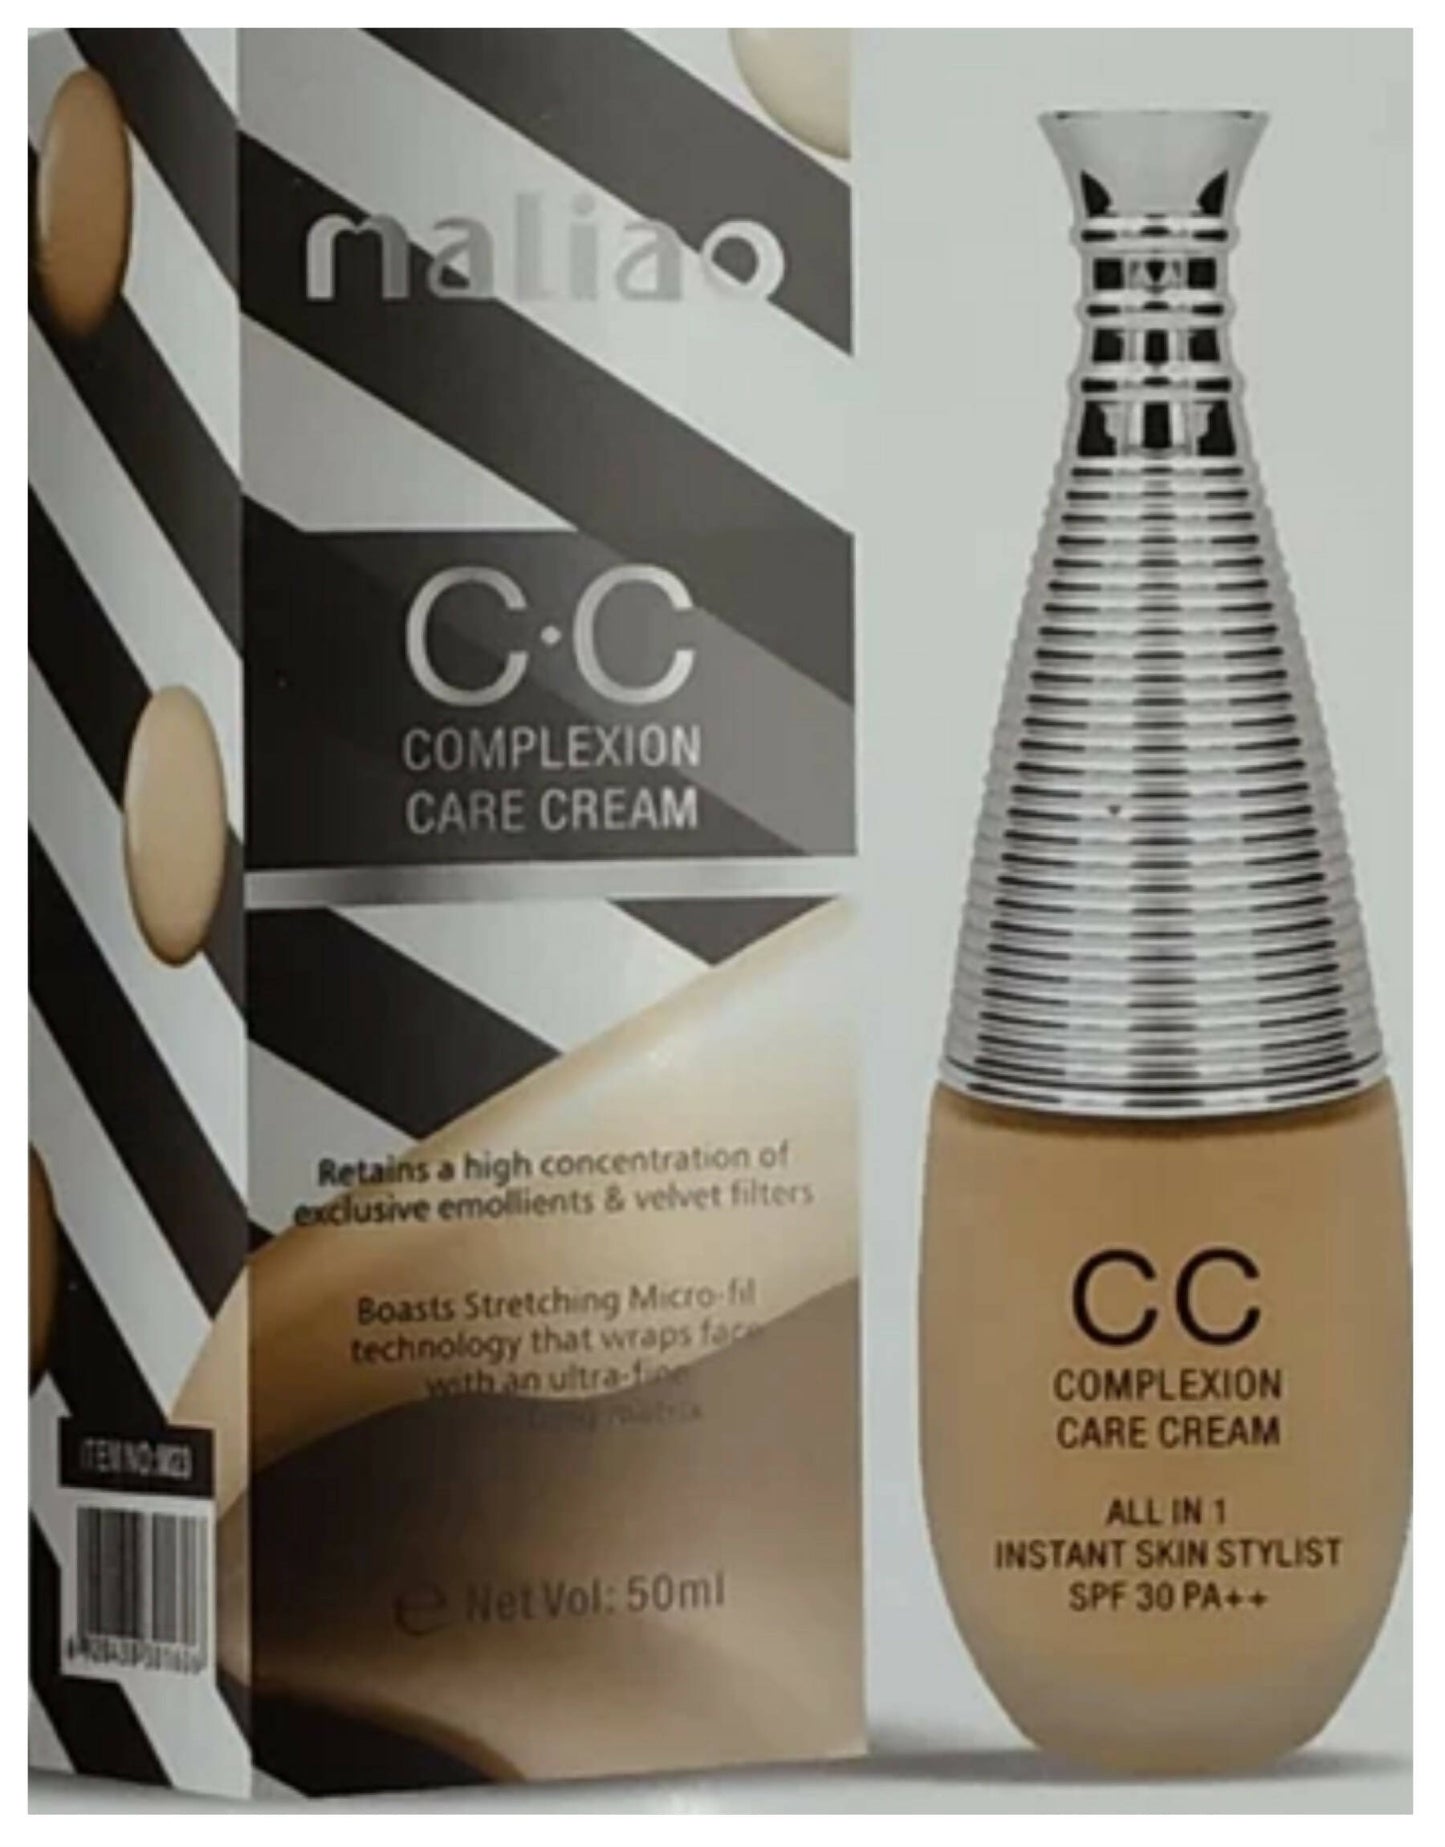 Maliao Cc All In 1 Instant Skin Stylist Foundation SPF 30 Pa++